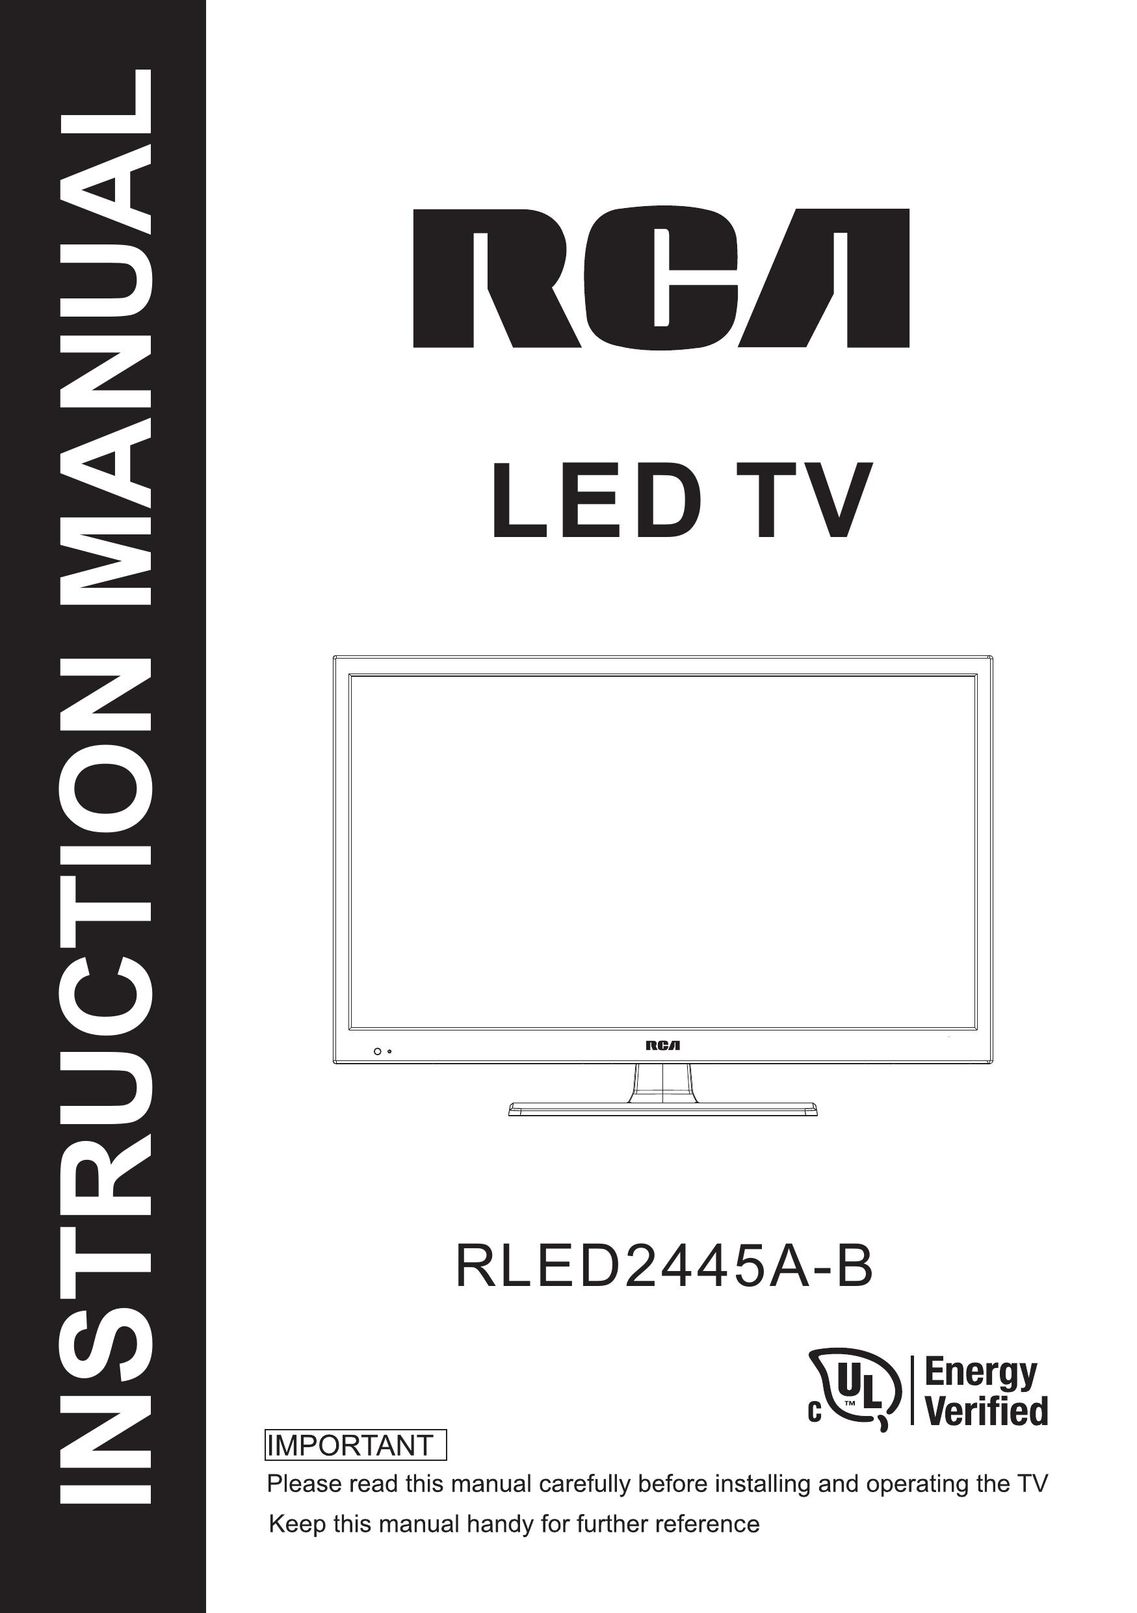 ProScan RLED2445A-B TV Receiver User Manual